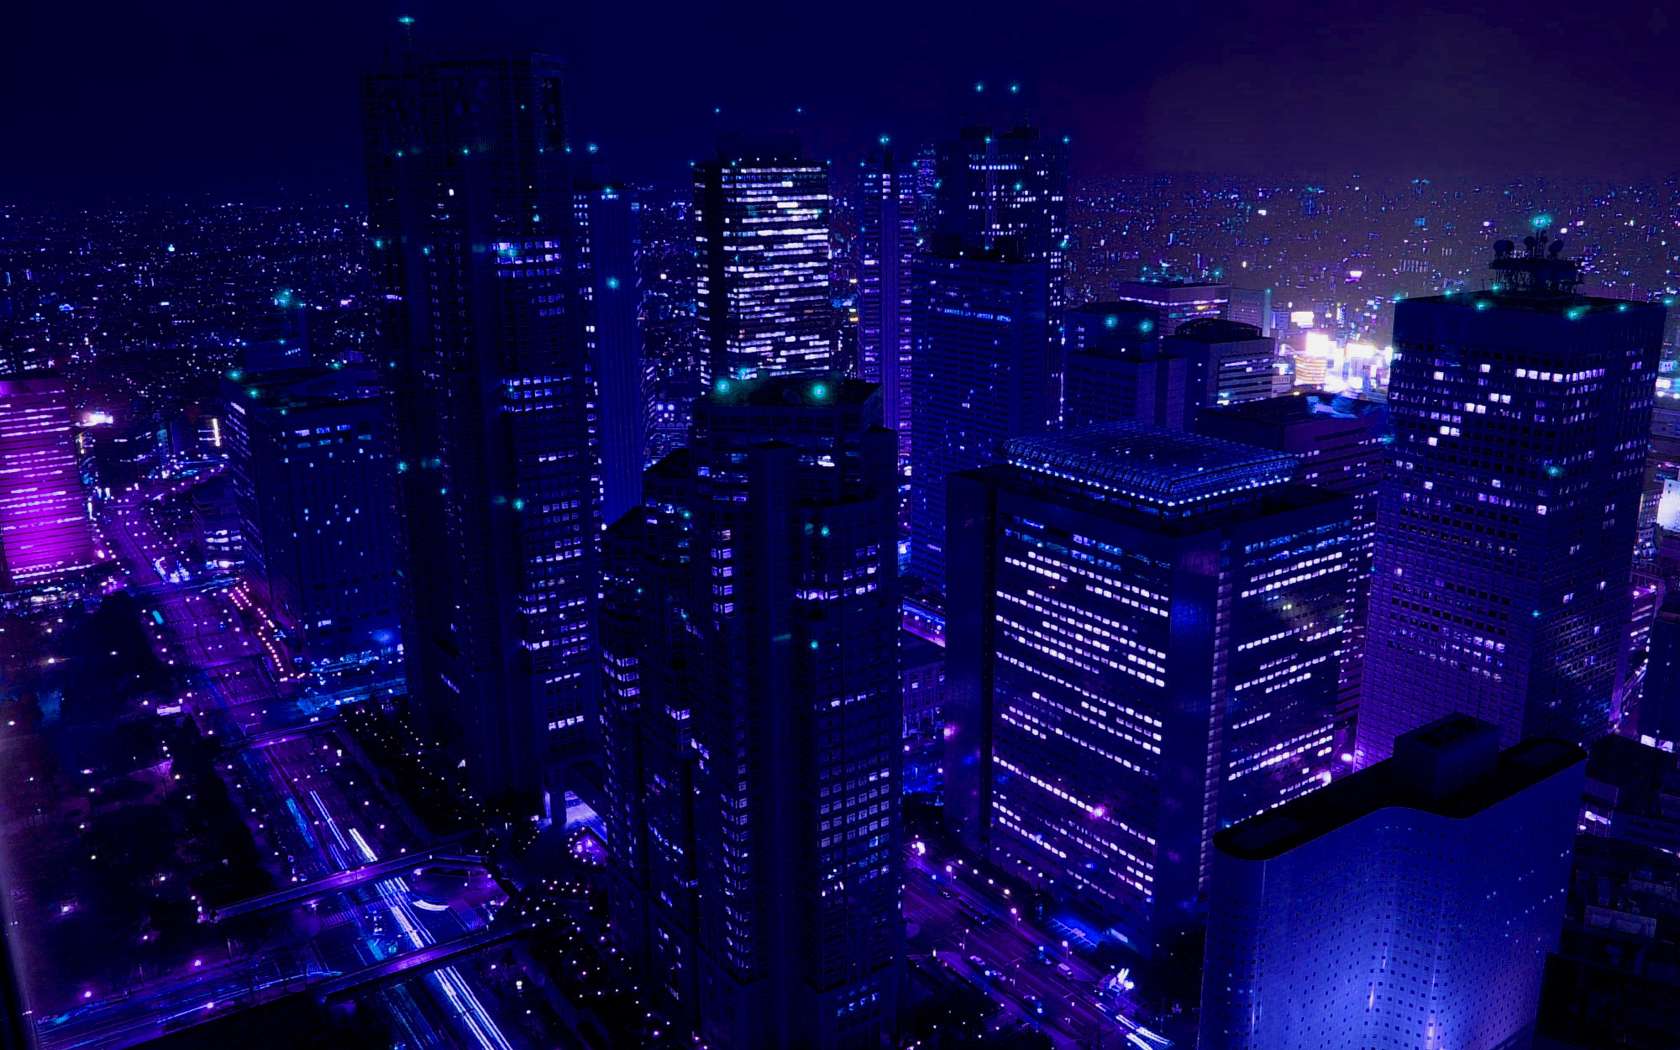 Download wallpaper 3840x2160 city aerial view buildings dusk purple 4k  uhd 169 hd background